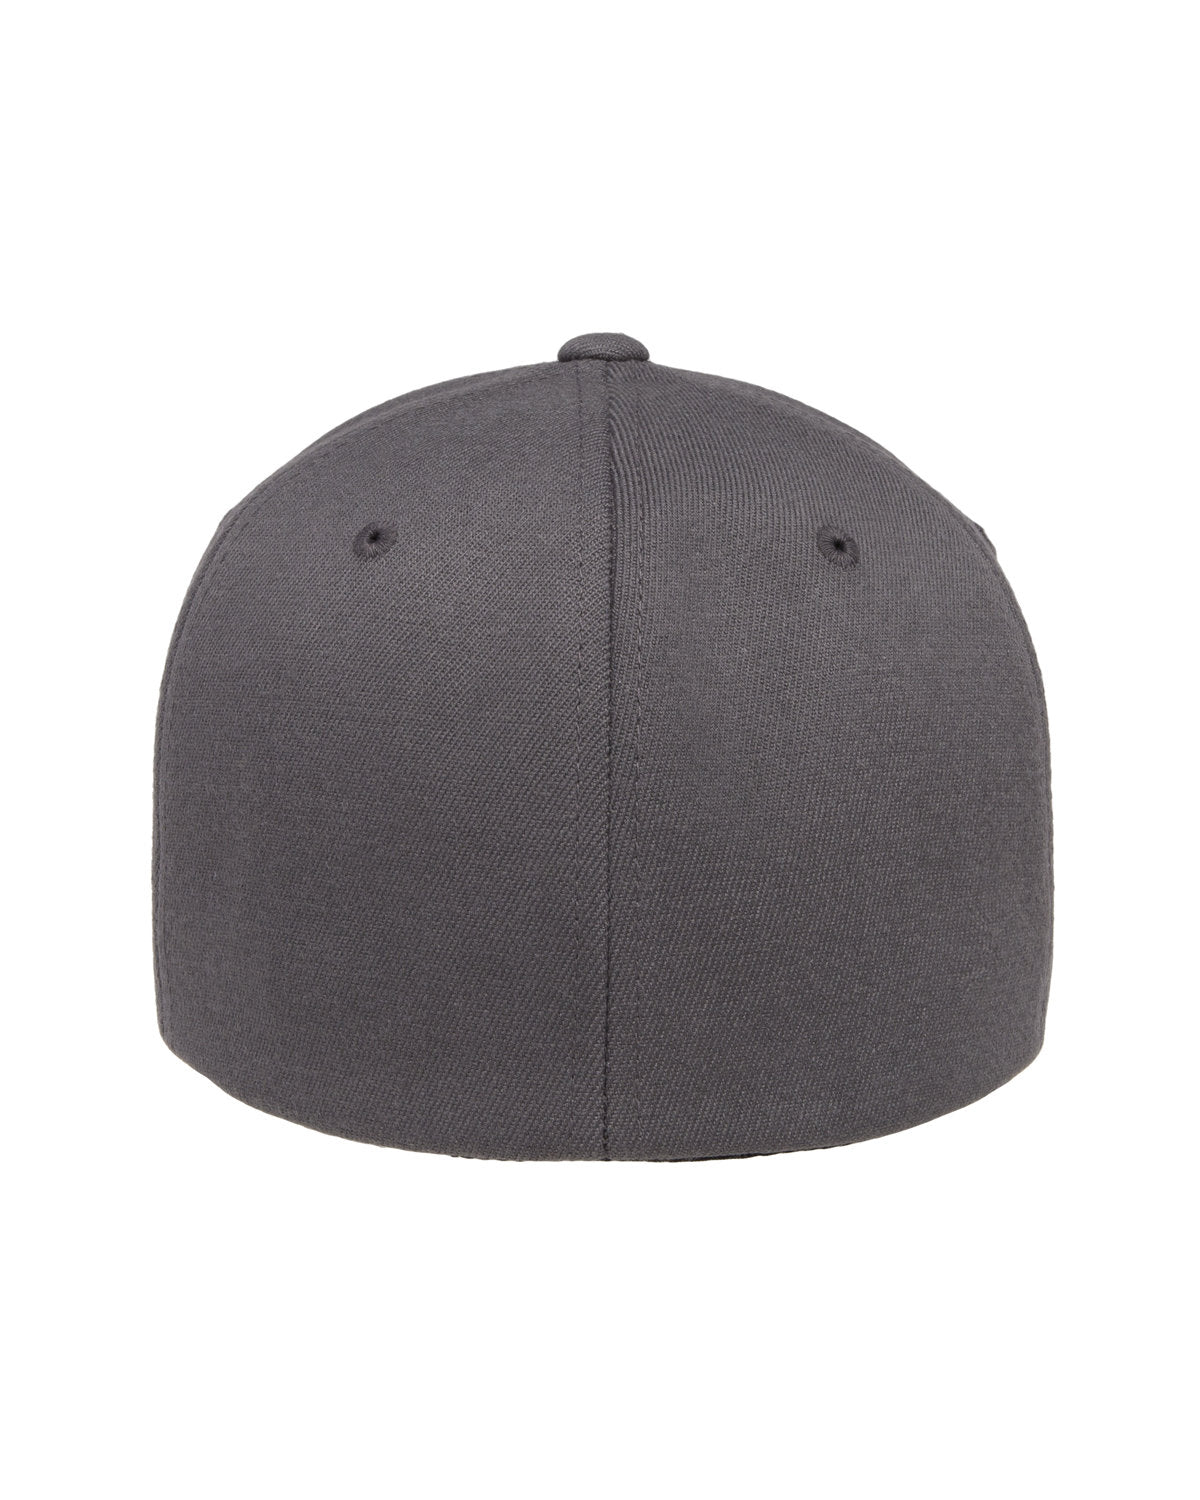 Flexfit Wool Blend Branded Caps, Grey